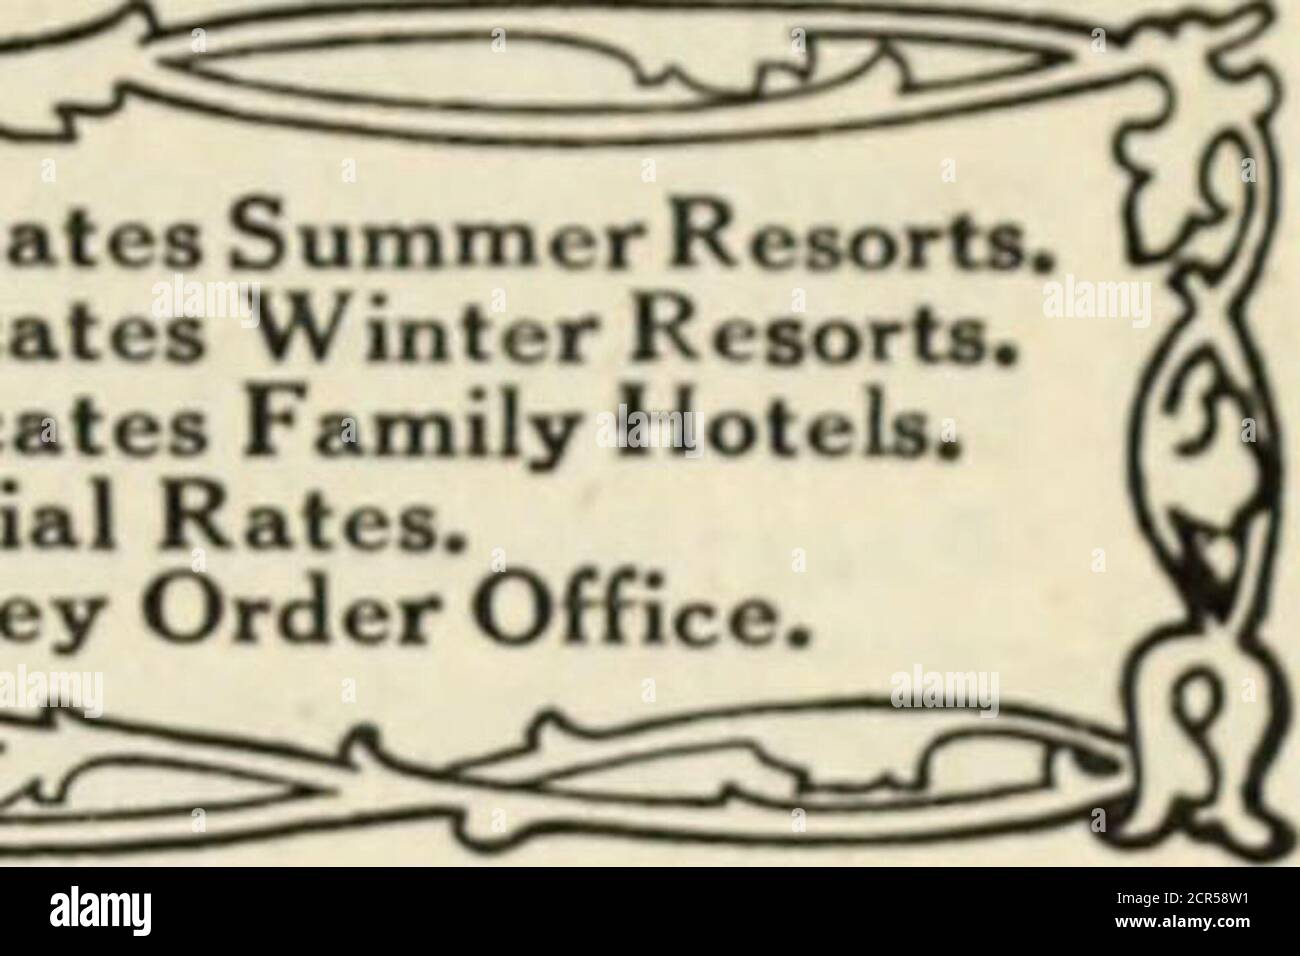 . The Official hotel red book and directory . UNION, • ; Monroe (. Pop. 600. i a&, a ^ o.) Centmi Hotel. John a. Camp-bell. WEBSTER SPRINGS, Webster Co. Pop. 500. (RR., B. & O. R. R.)Webster Hotel. (A. P.) WELCH, * f McDowell Co. Pop.3,000. (RR., N. & W.) ELLWOOD HOTEL. (E. P.) $1-$1.50. Sam Polon, Mgr.TUG RiyER HOTEL. (A. P.)$2.50-$3. E. S. Clark. WELLSBURG, * f Brooke Co.Pop. 4,189. (RR., Penn.) HOTEL CHARLTON. (A. P.$2 up. E. P. $1.) F. Charl-ton. WESTON, * Lewis Co. Pop. 2,213.(RR., B. & O.) Bailey House. (A. P.) Mrs. L. S. Tunstill. Prop.Camden Hotel.Montieollo Hotel. WEST UNION, * Doddri Stock Photo